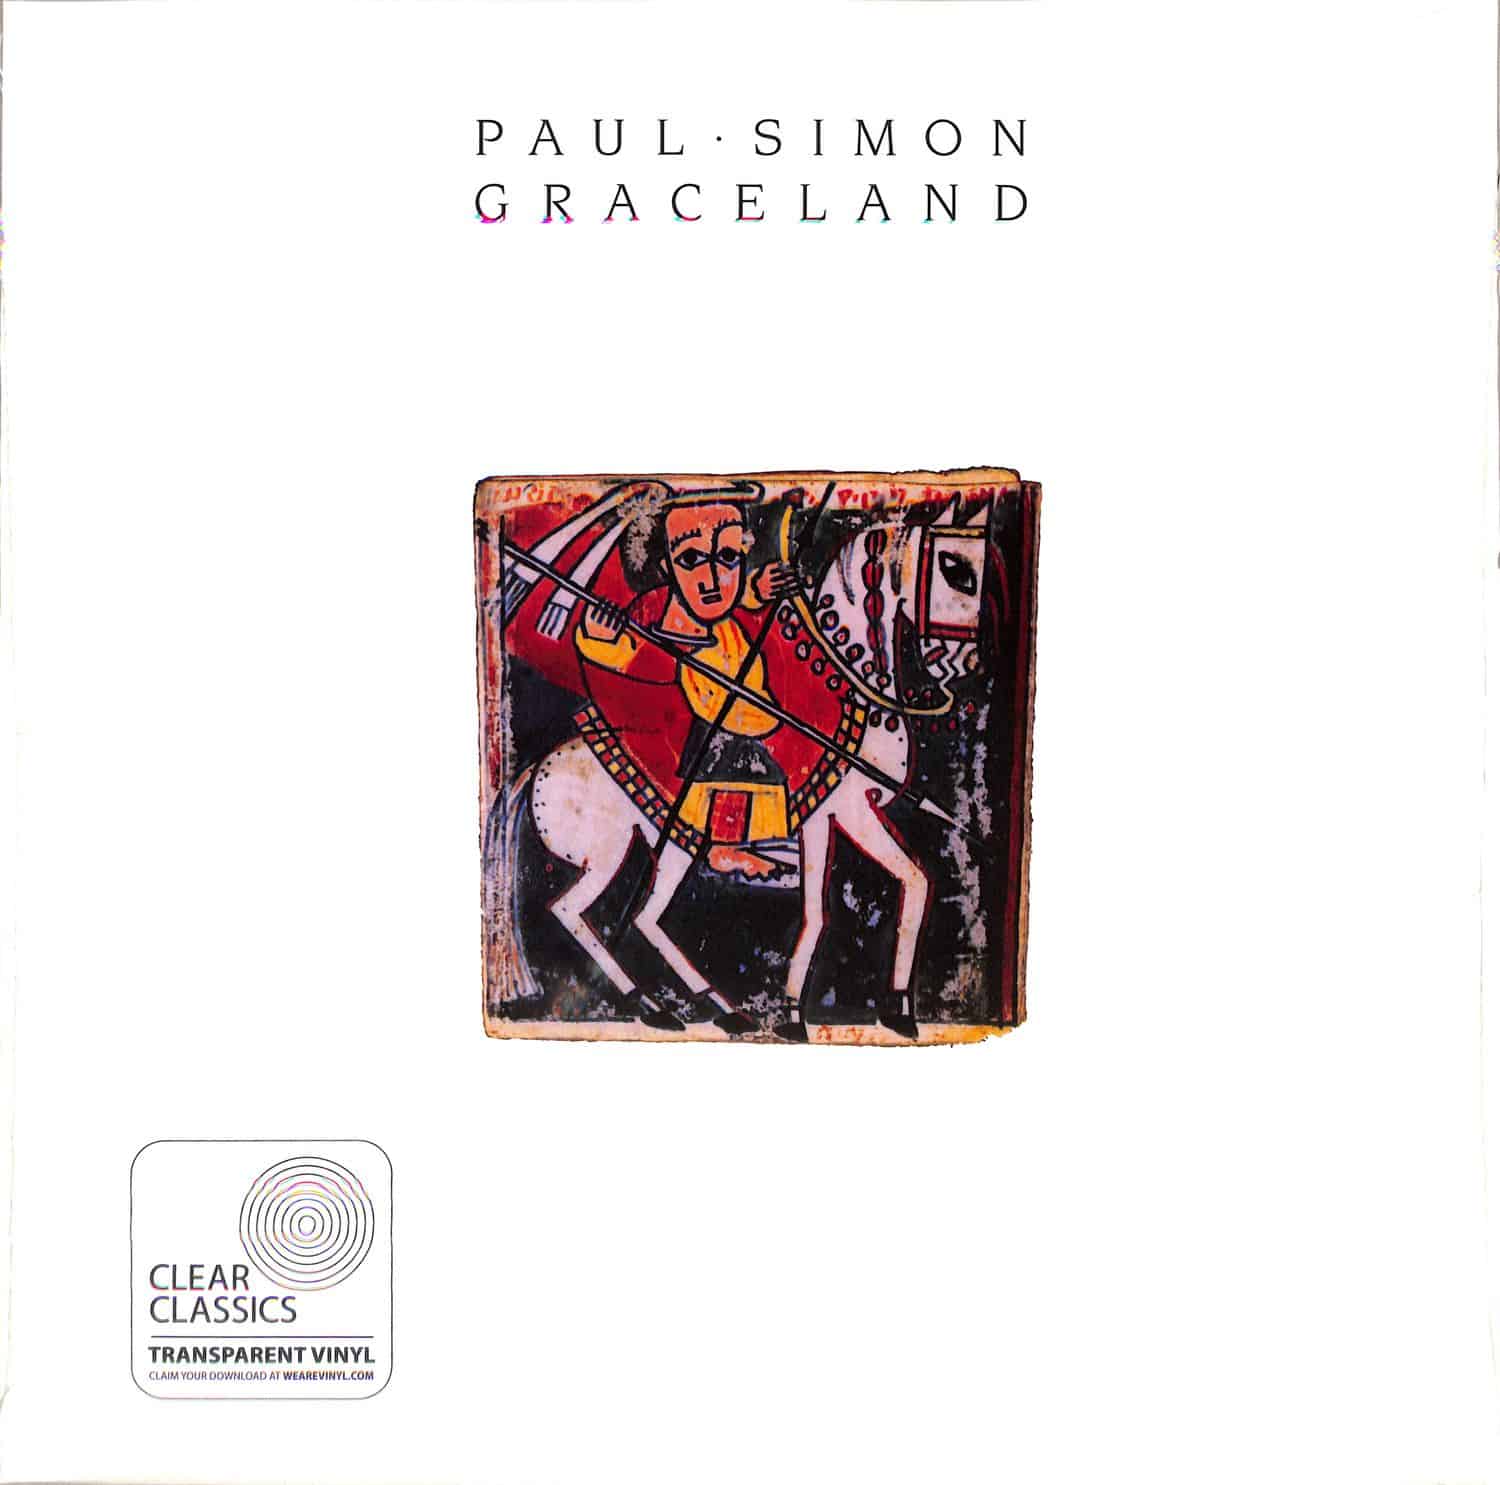 Paul Simon - GRACELAND 